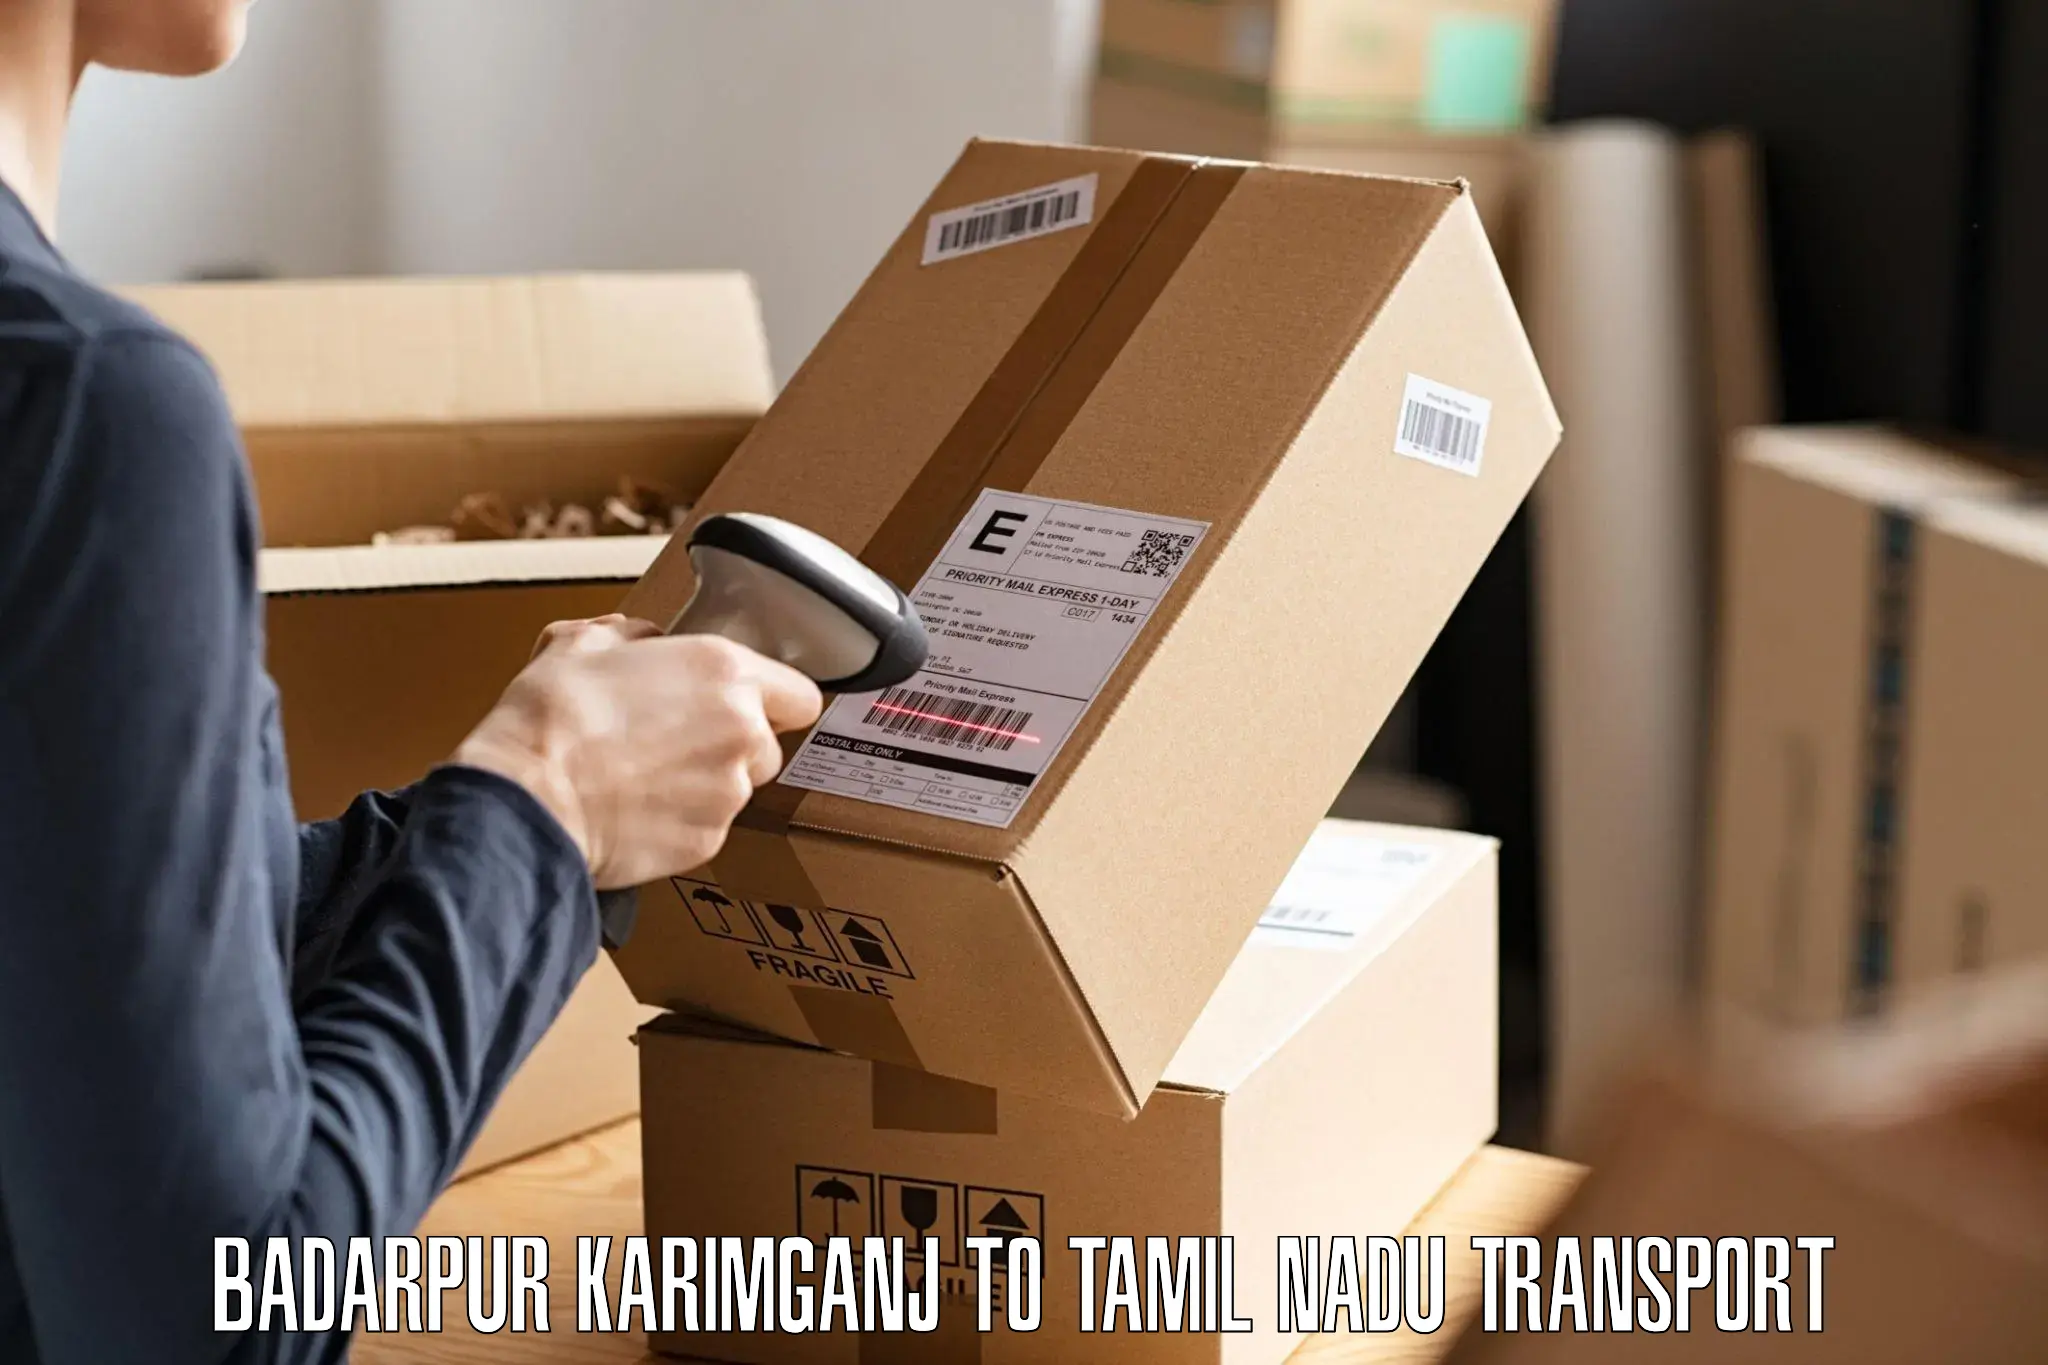 Delivery service Badarpur Karimganj to Thiruvadanai